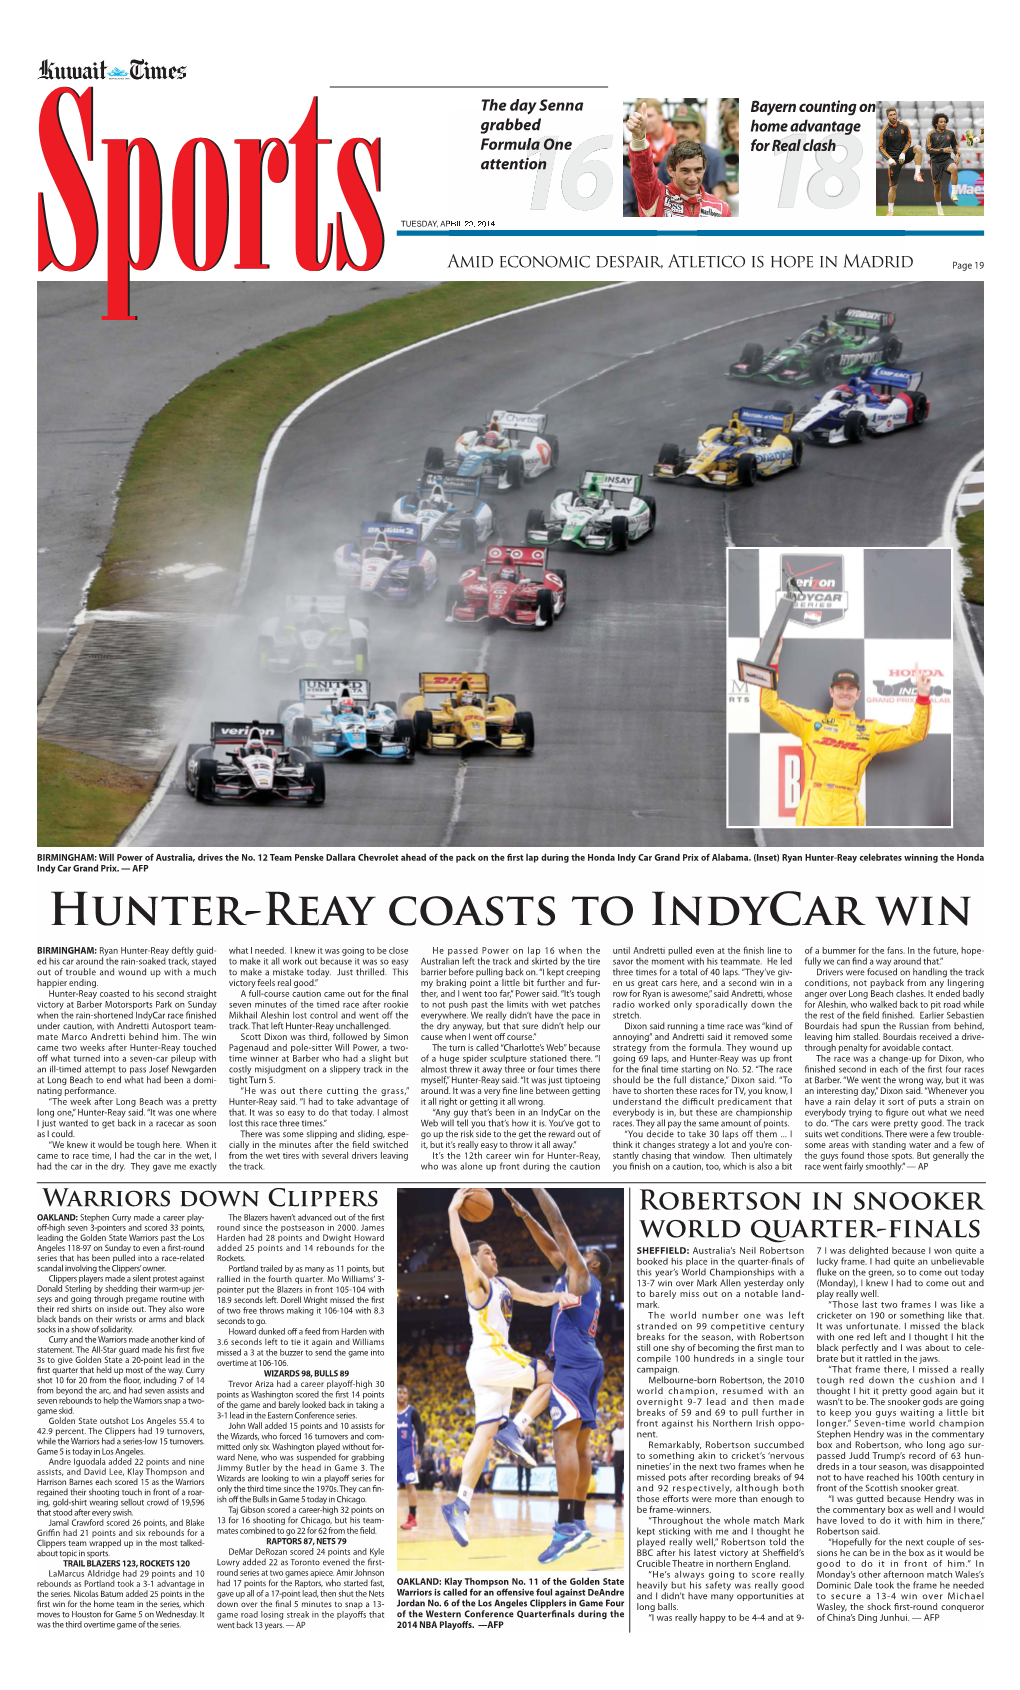 Hunter-Reay Coasts to Indycar Win